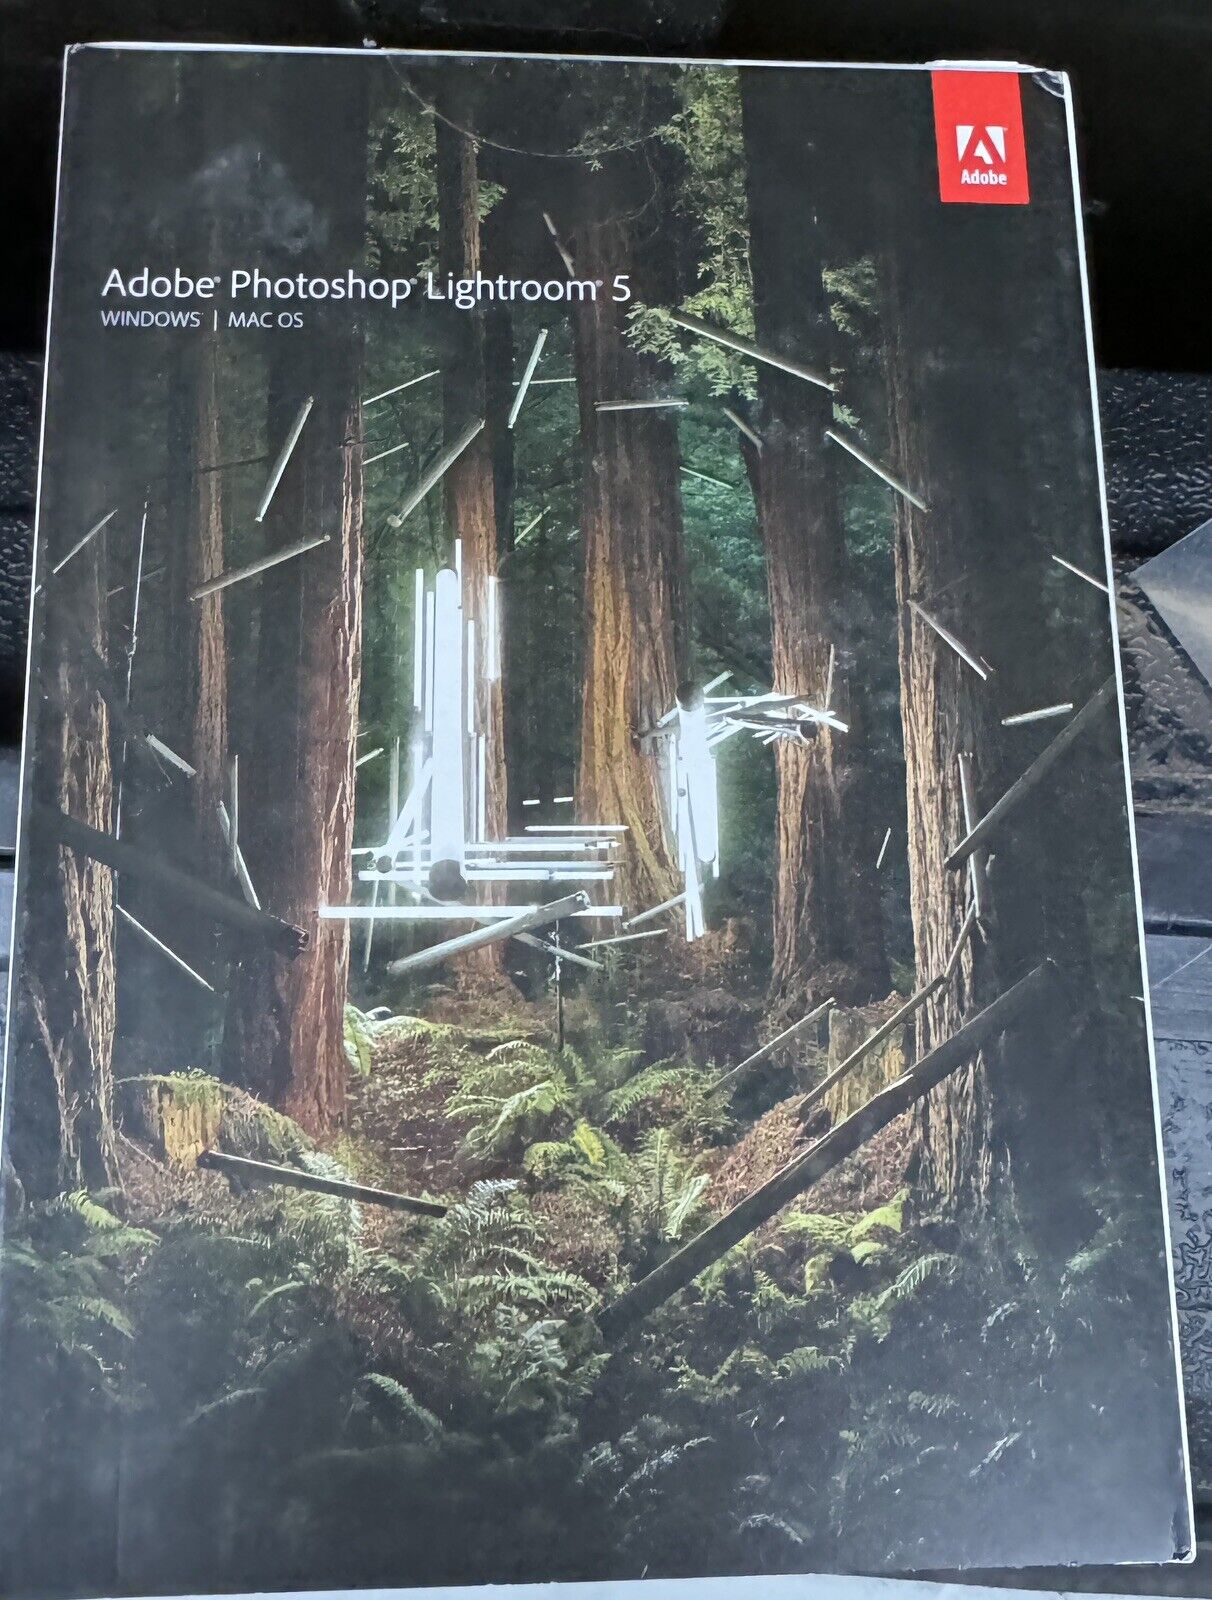 Adobe Photoshop Lightroom 5 for Mac OS and Windows Full Retail Version NIB